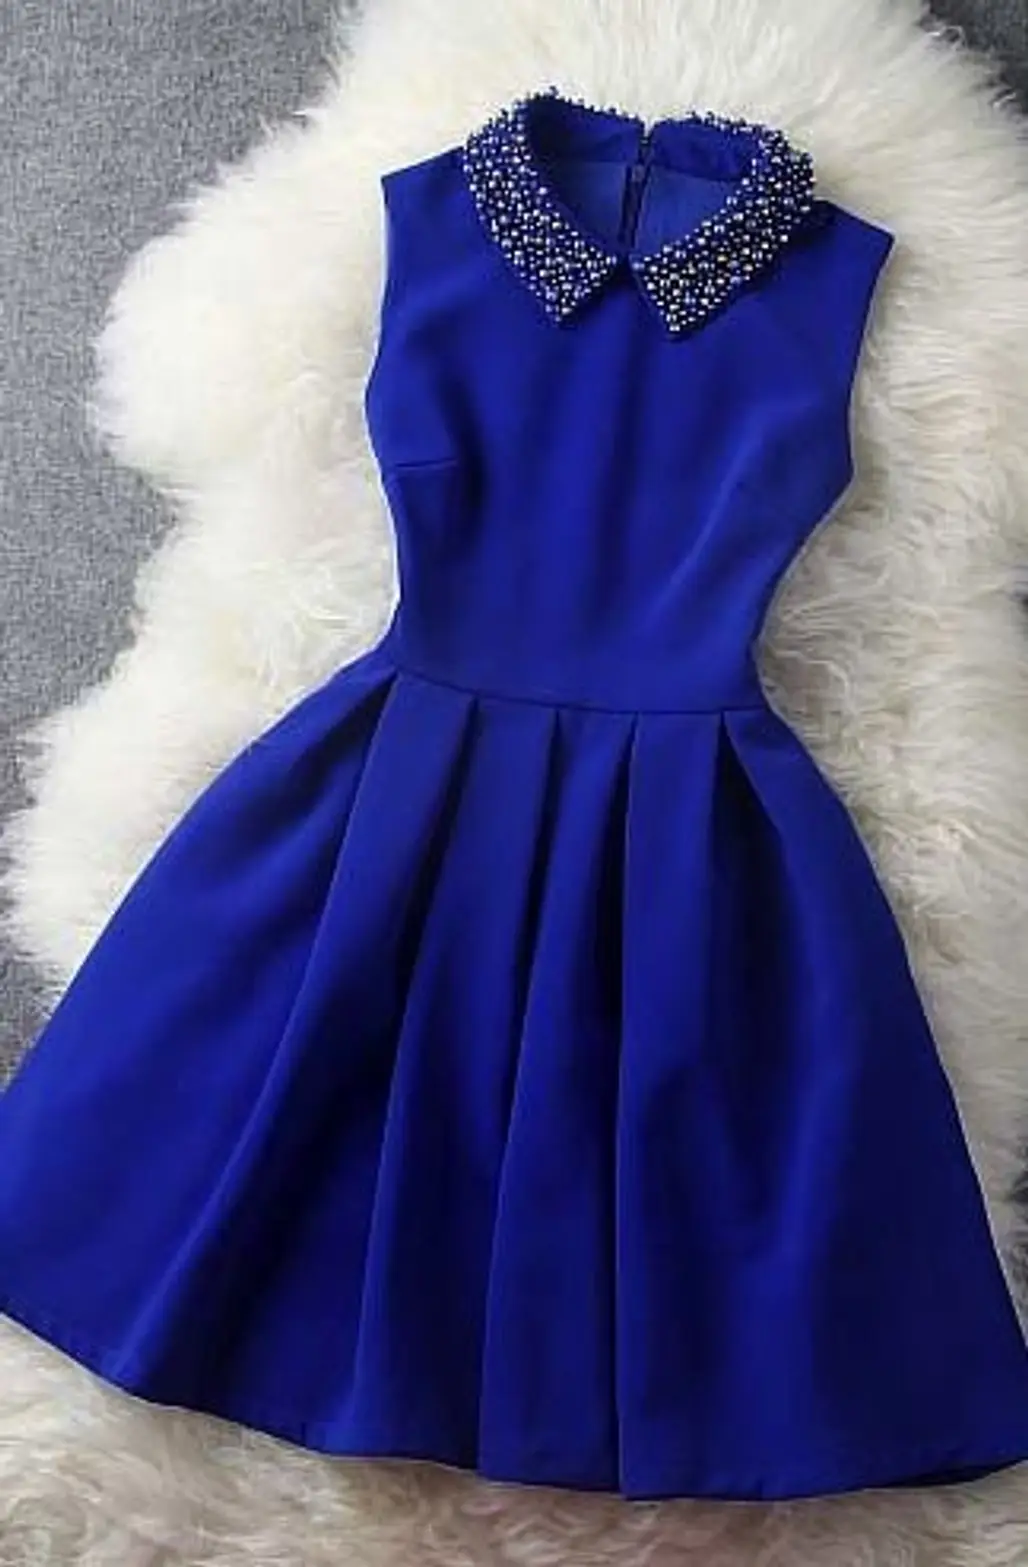 dress,blue,clothing,woman,bridal party dress,